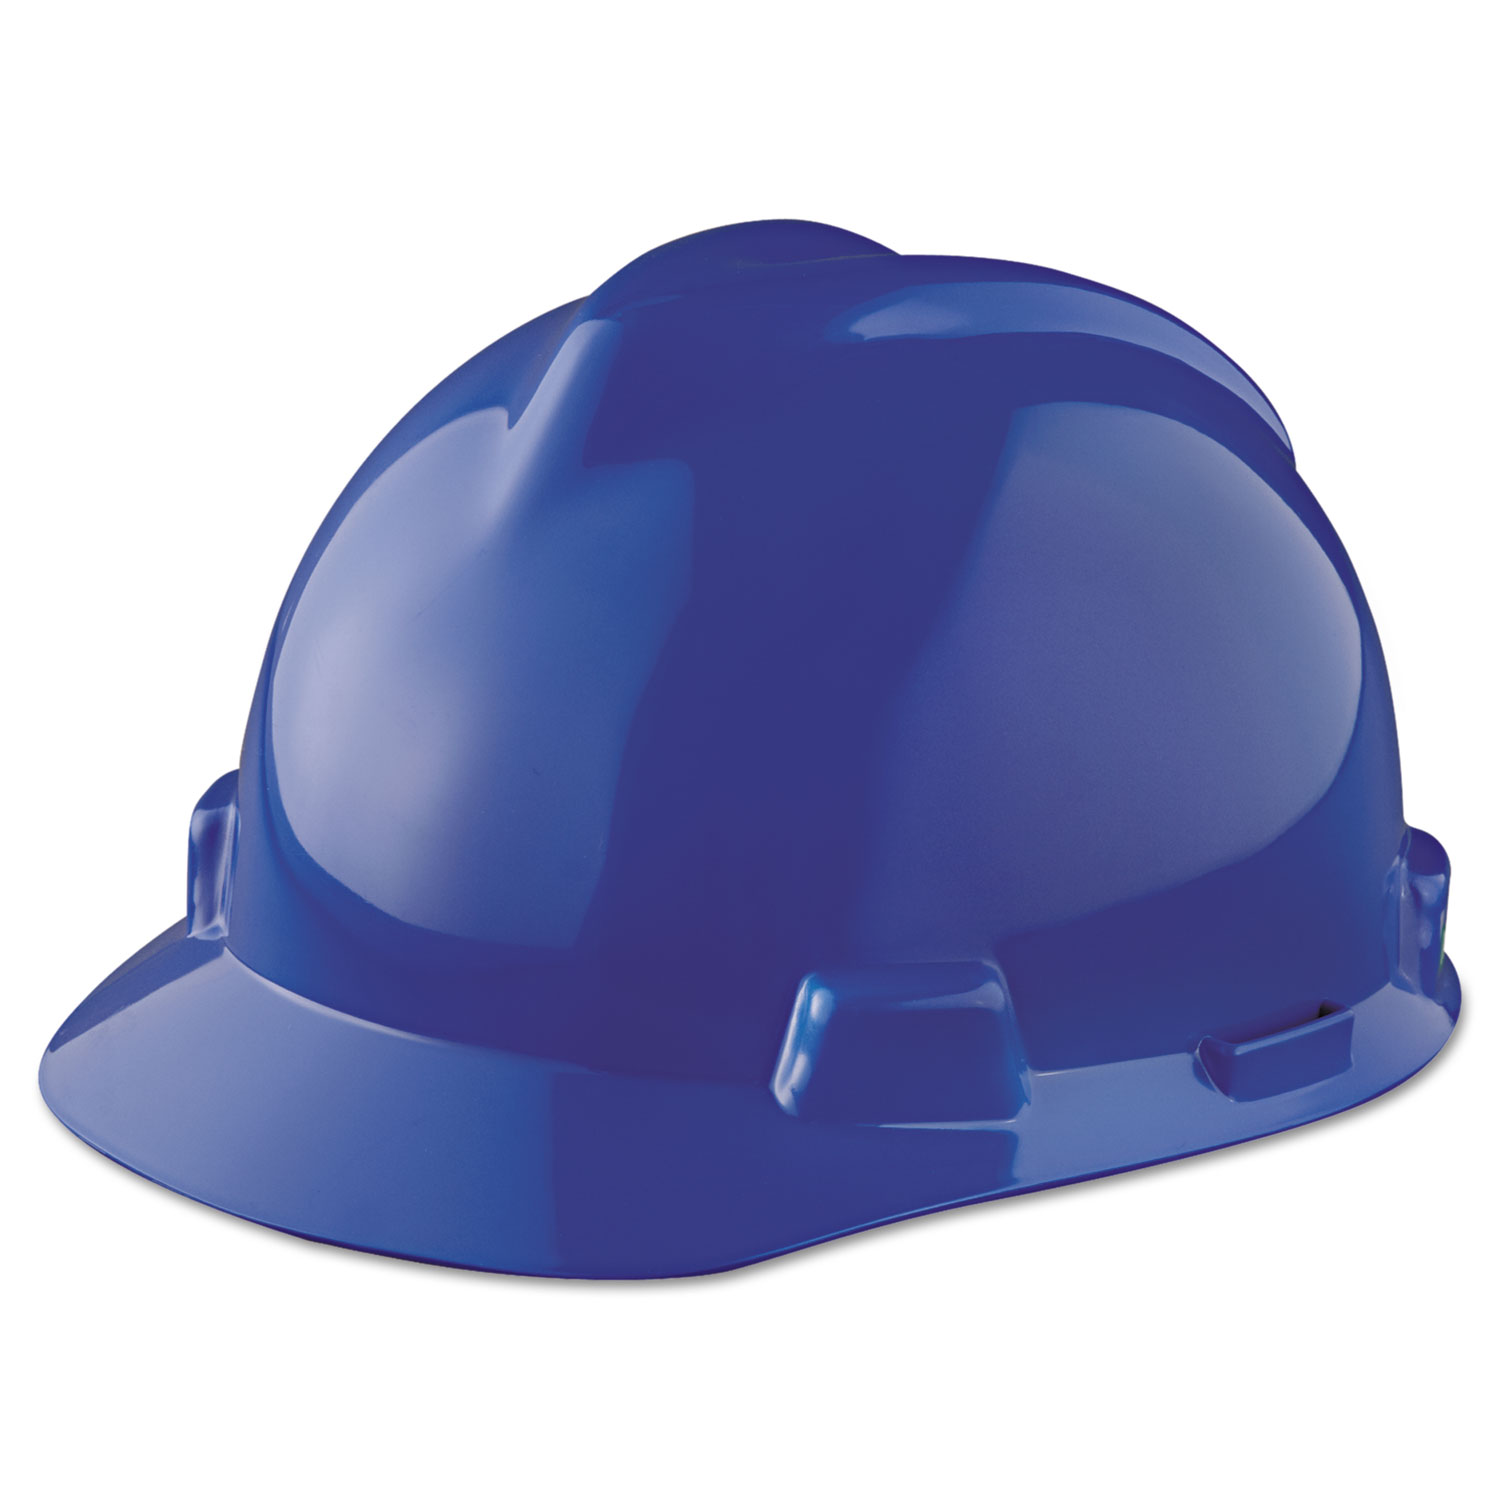 V-Gard Hard Hats, Staz-On Pin-Lock Suspension, Size 6 1/2 - 8, Blue